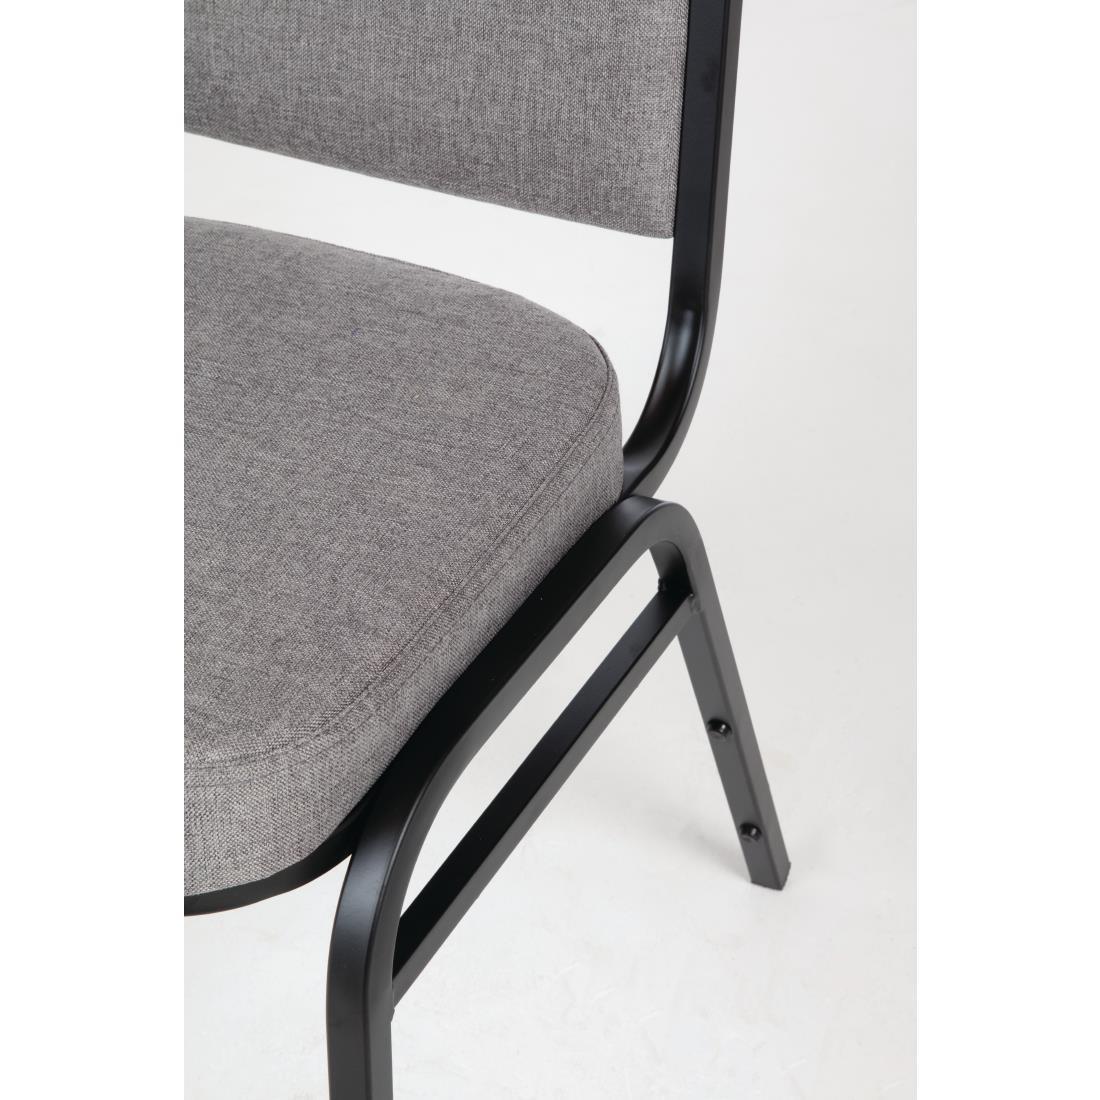 Bolero Square Back Banquet Chairs Black & Grey (Pack of 4) - DA602  - 5